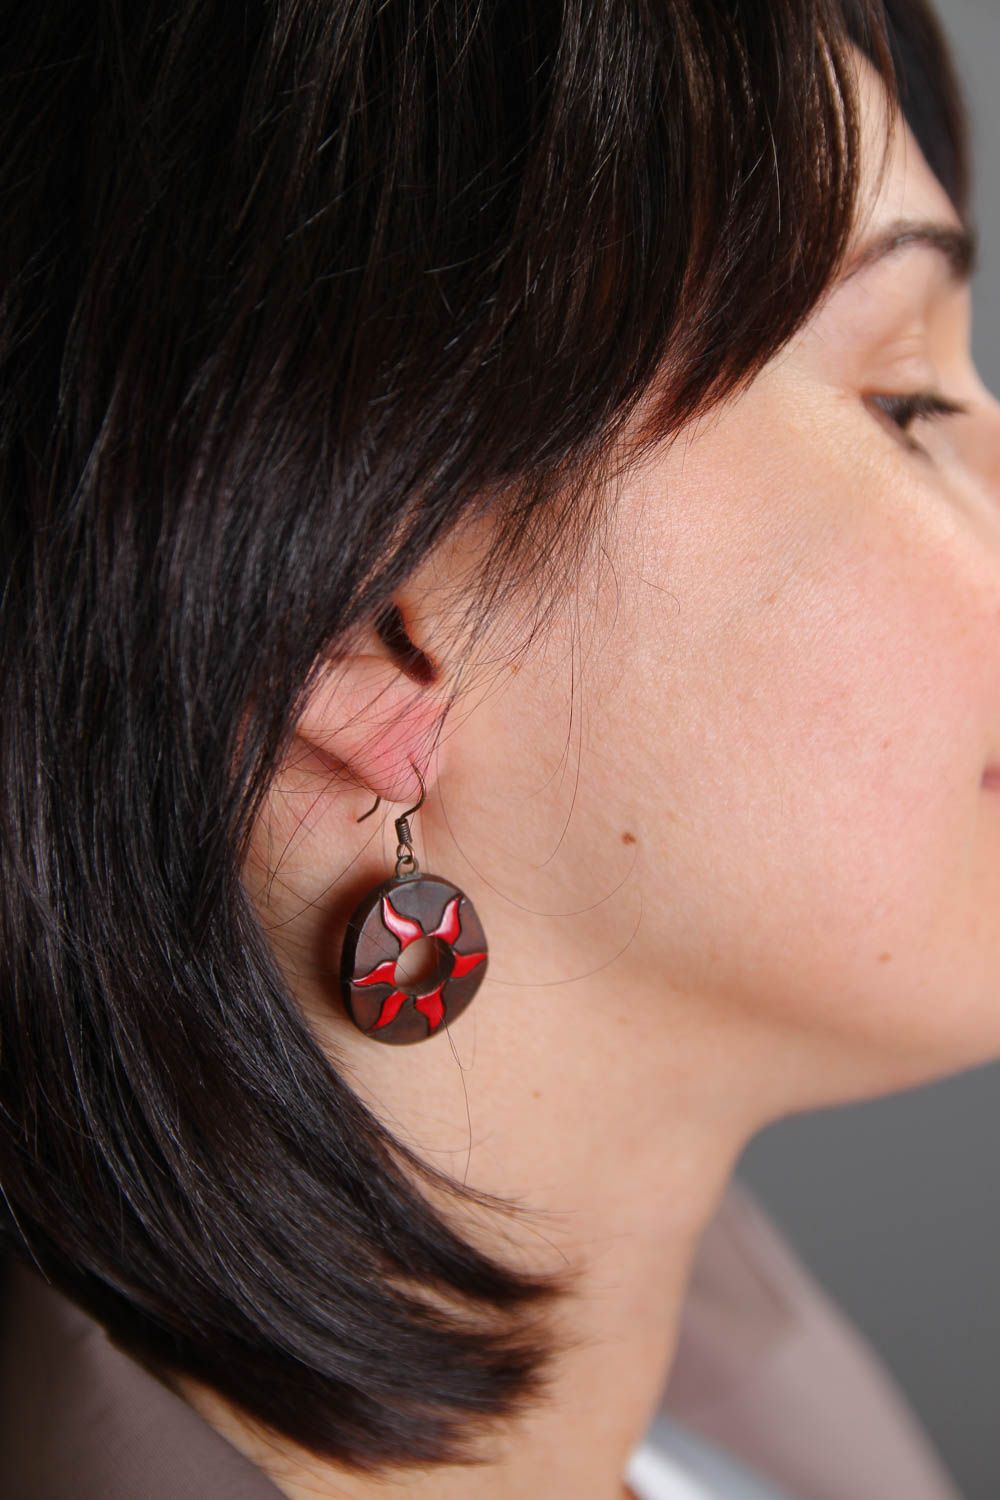 Handmade earrings designer jewelry fashion accessories dangling earrings photo 4